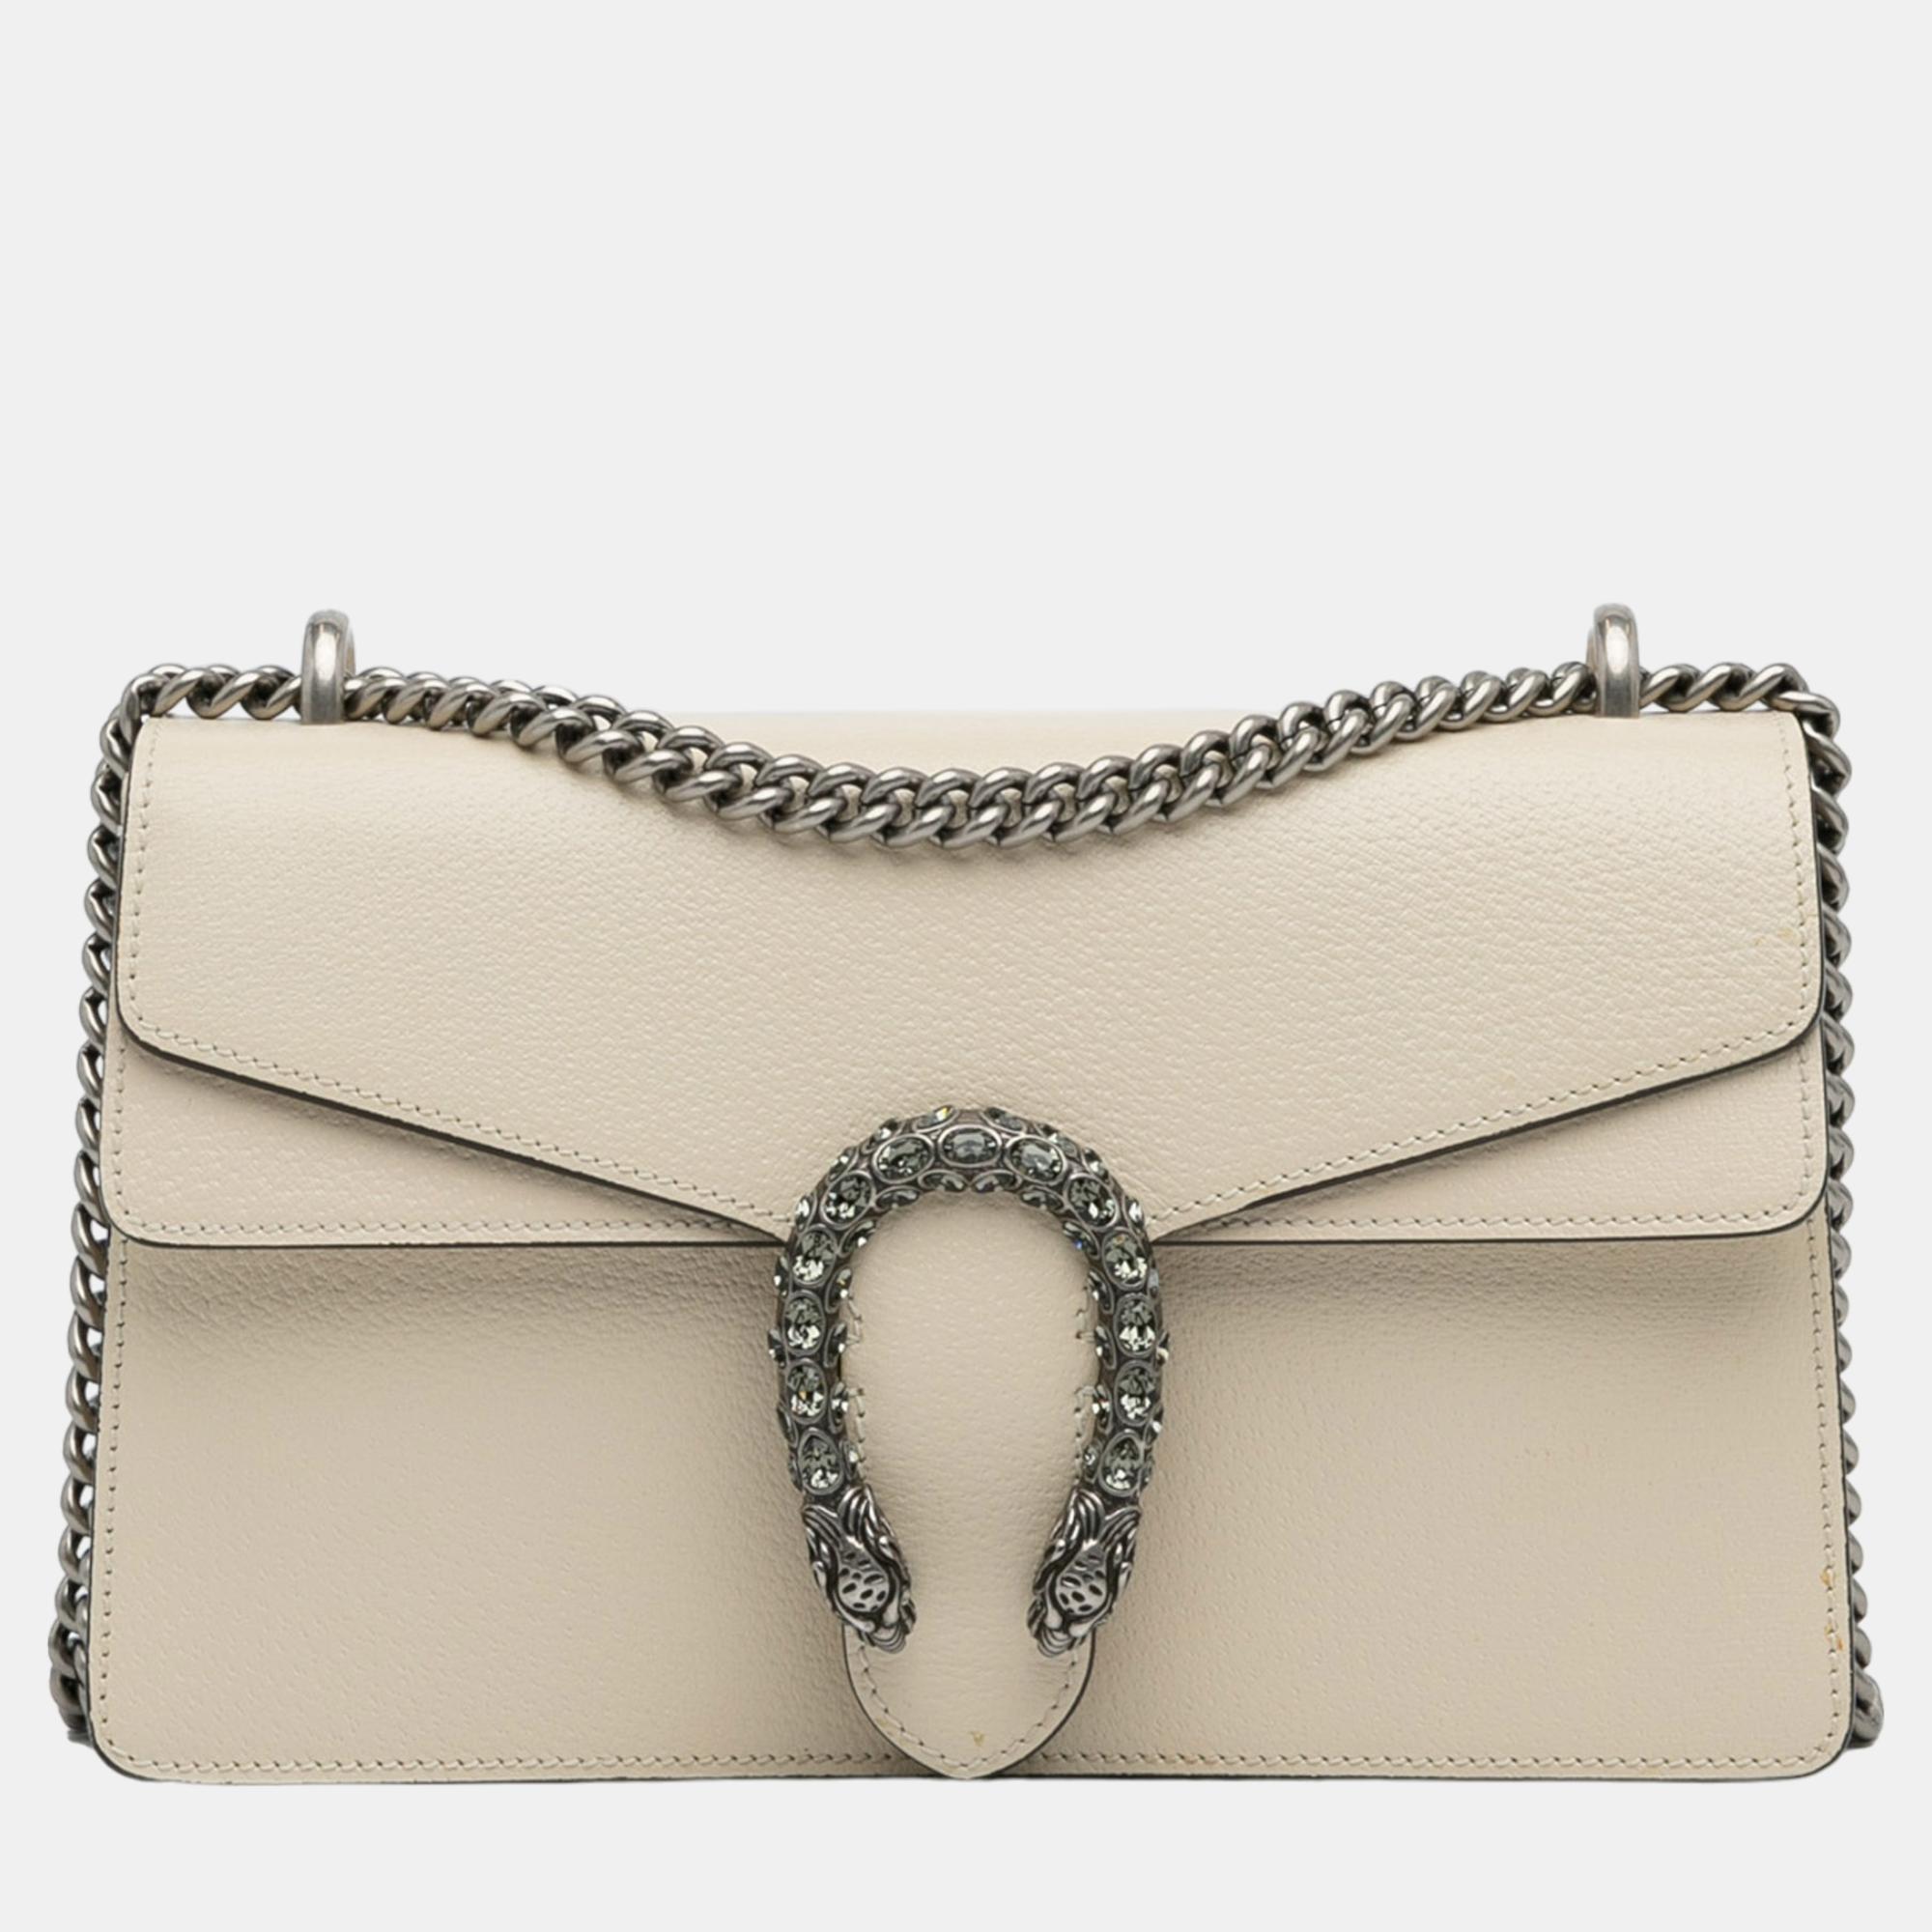 Gucci white small dionysus shoulder bag